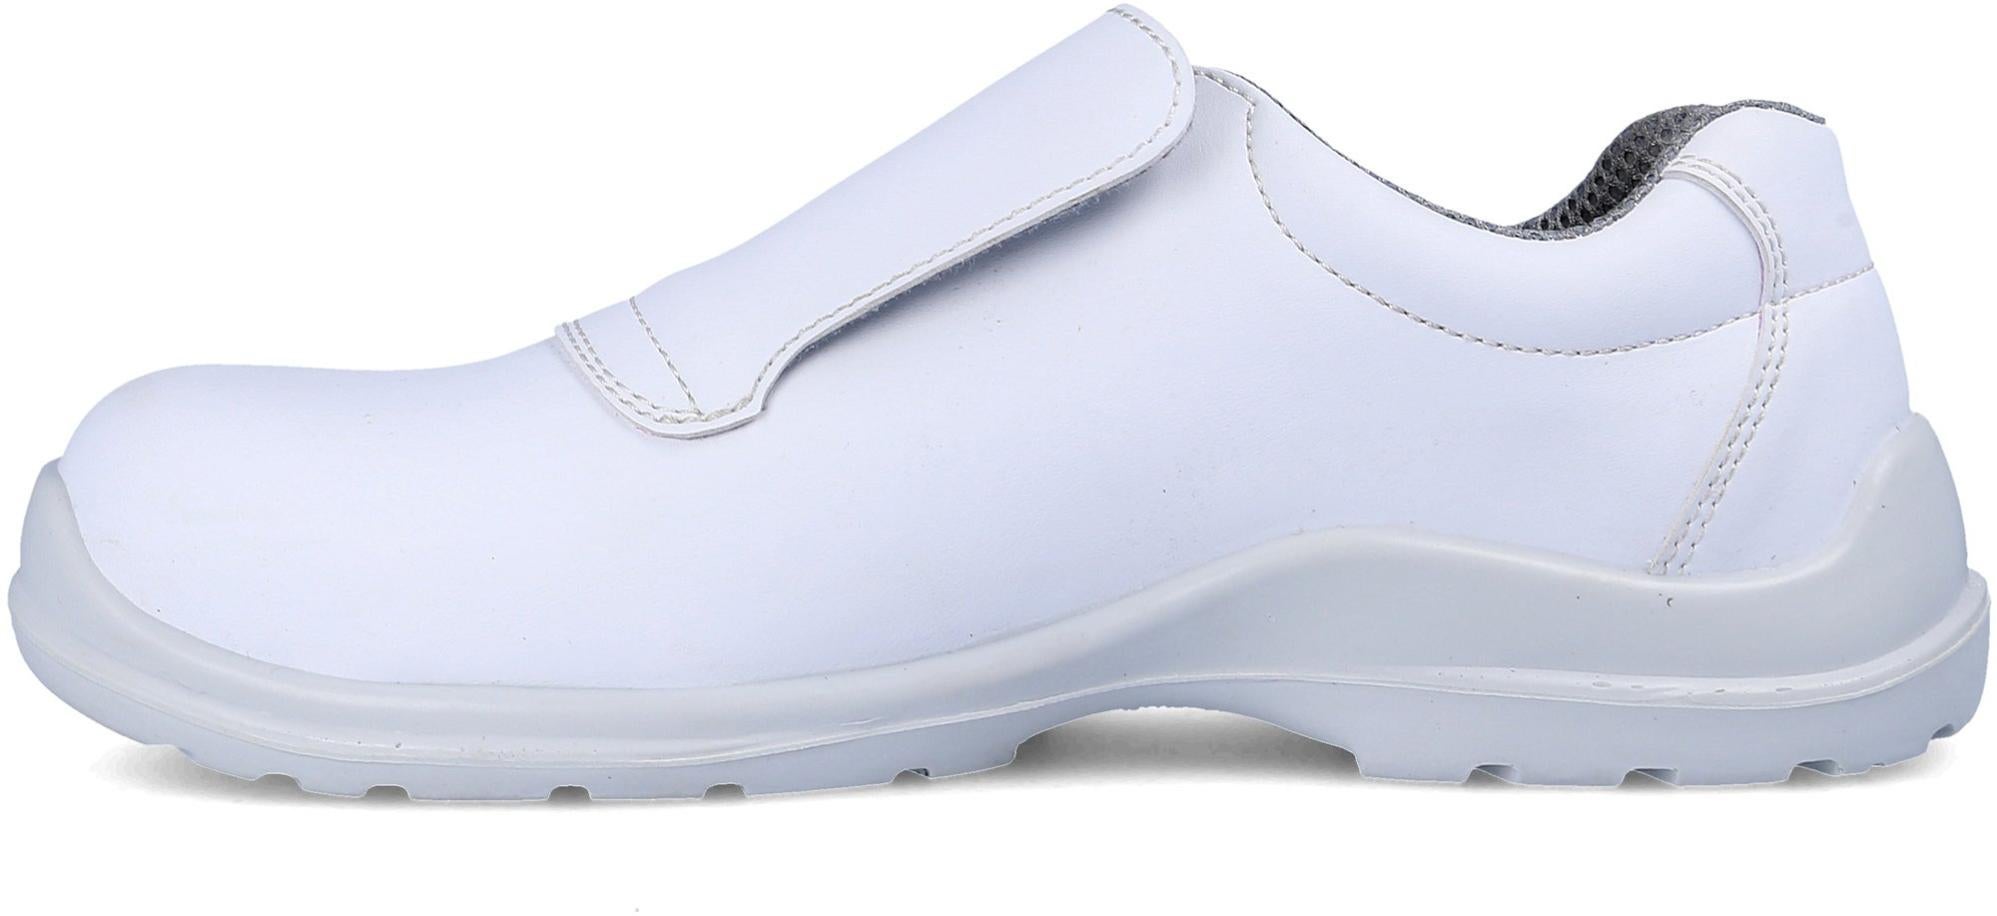 Zapato seguridad paredes, arzak microfibra blanco, talla 44